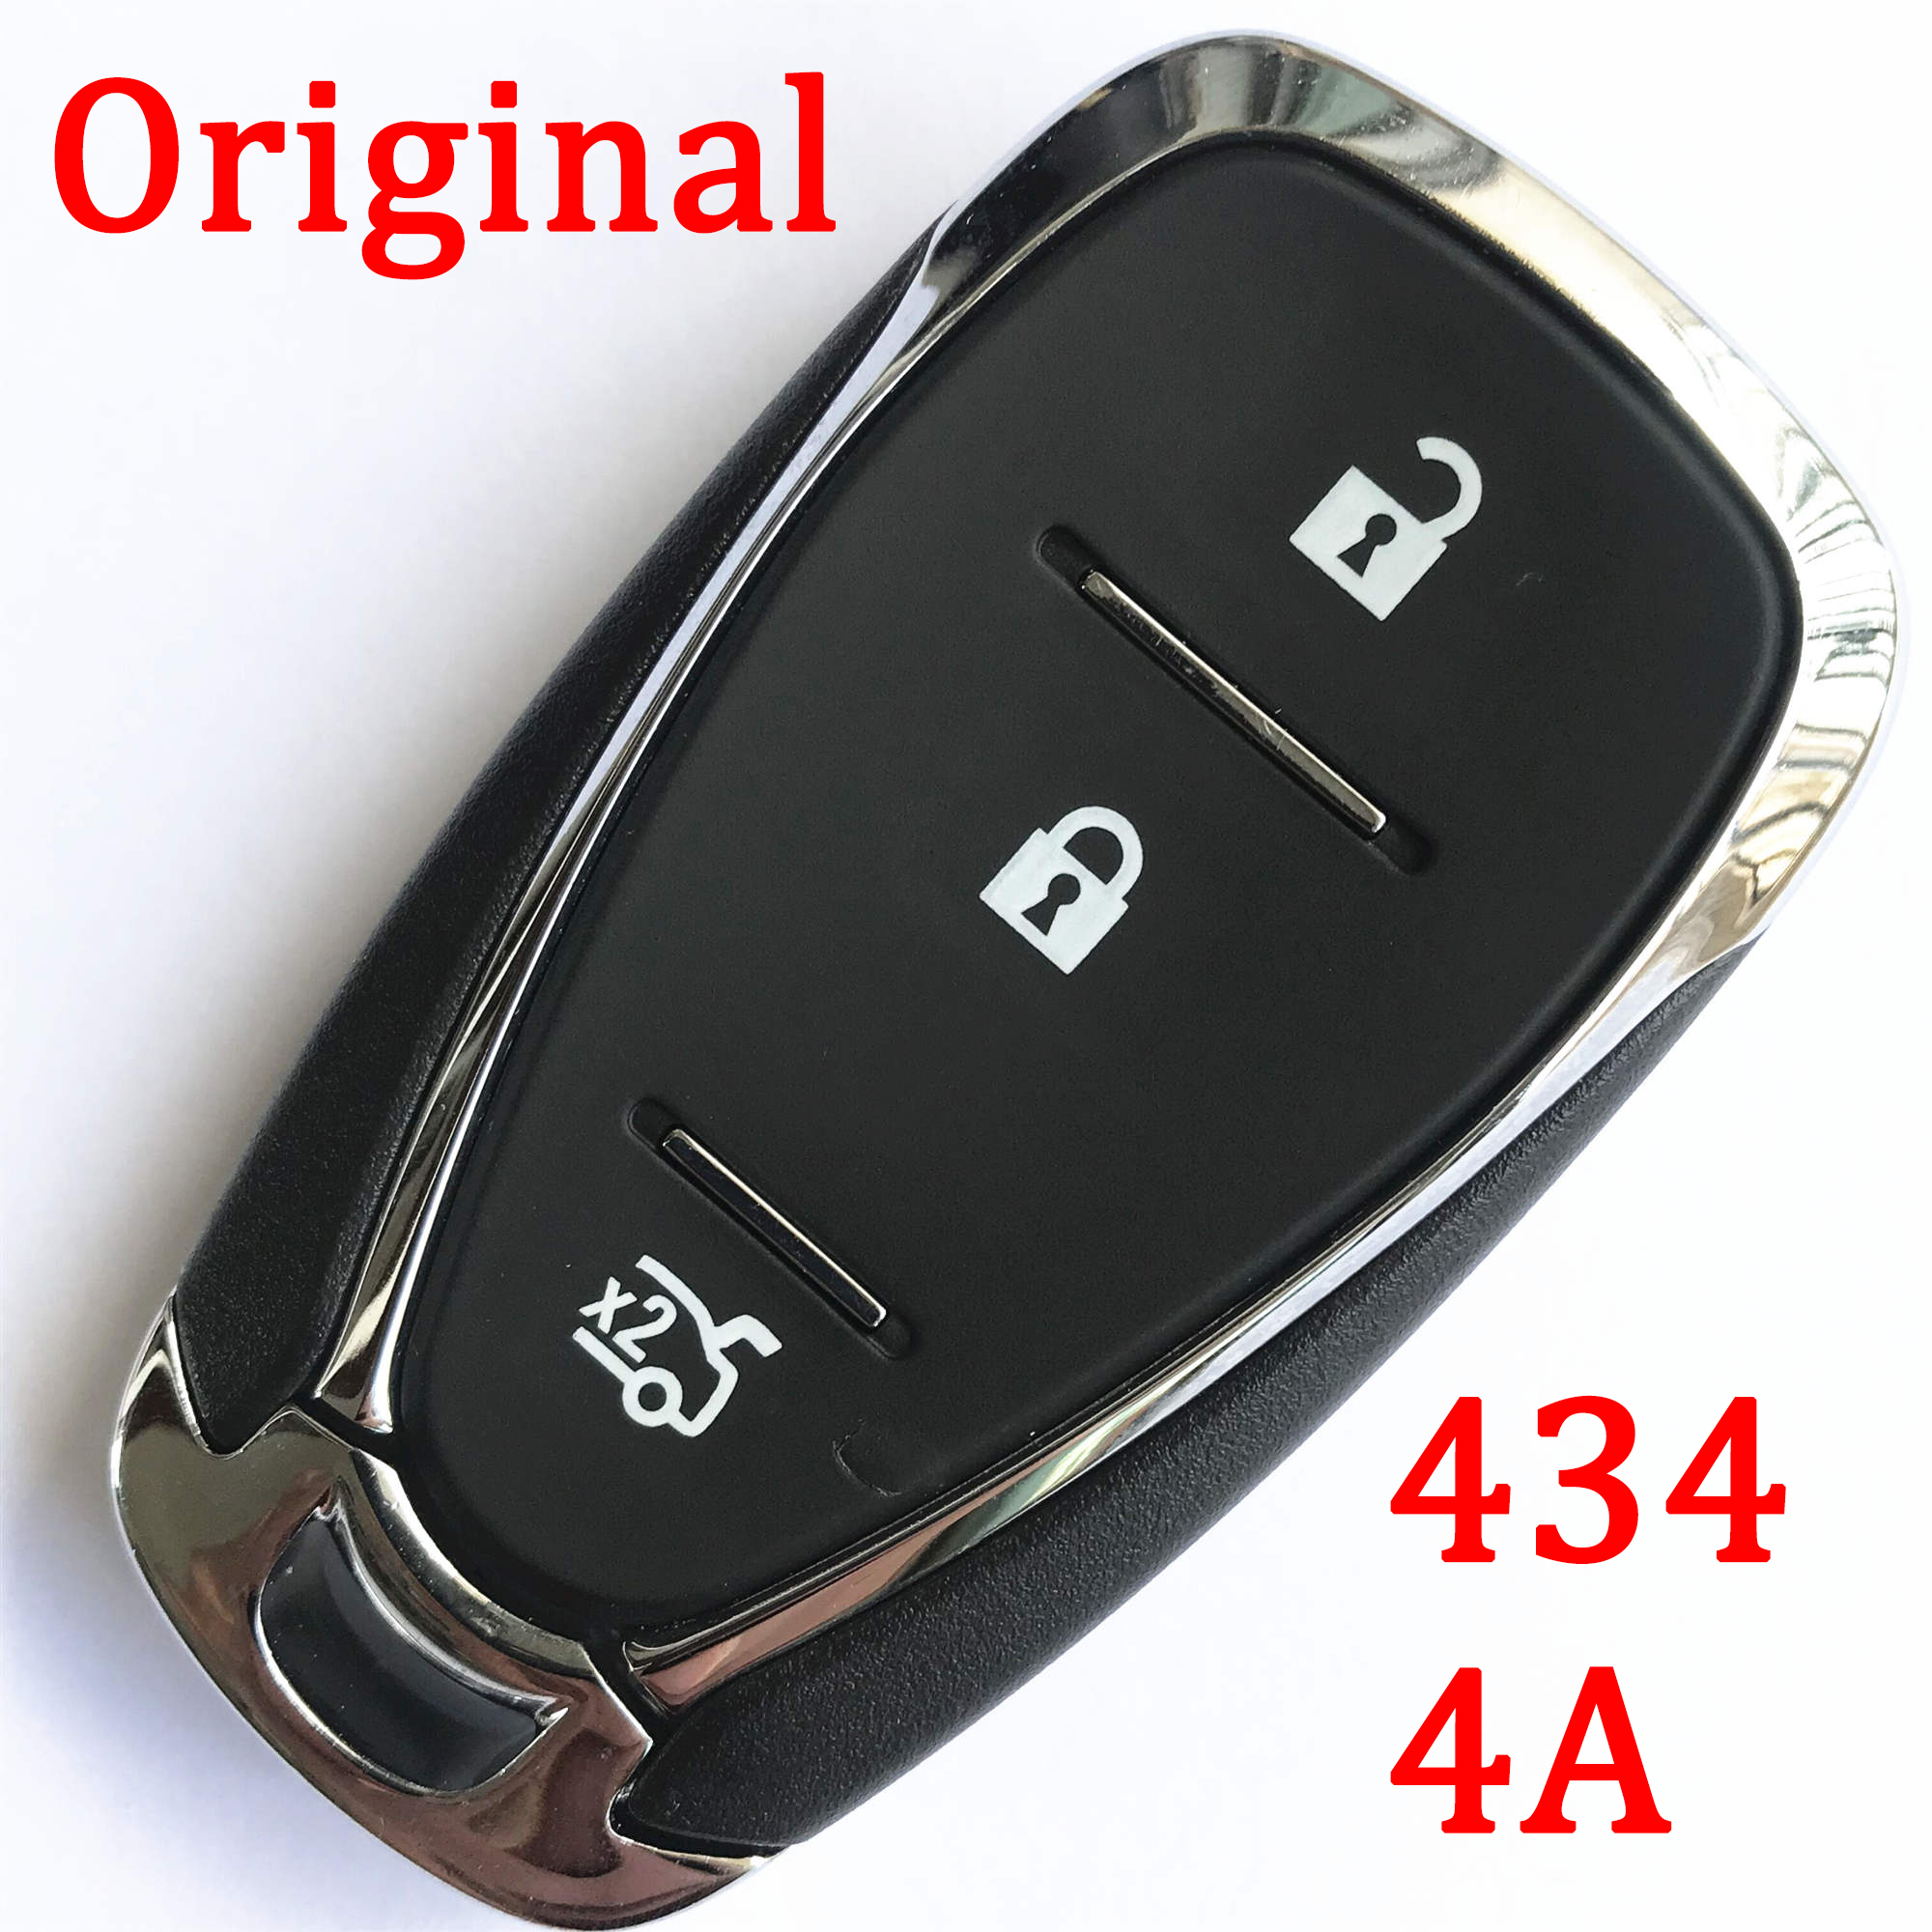 Original 3 Buttons 434 MHz Virgin Smart Proximity Key for Chevrolet  Spark Sonic - 4A Chip